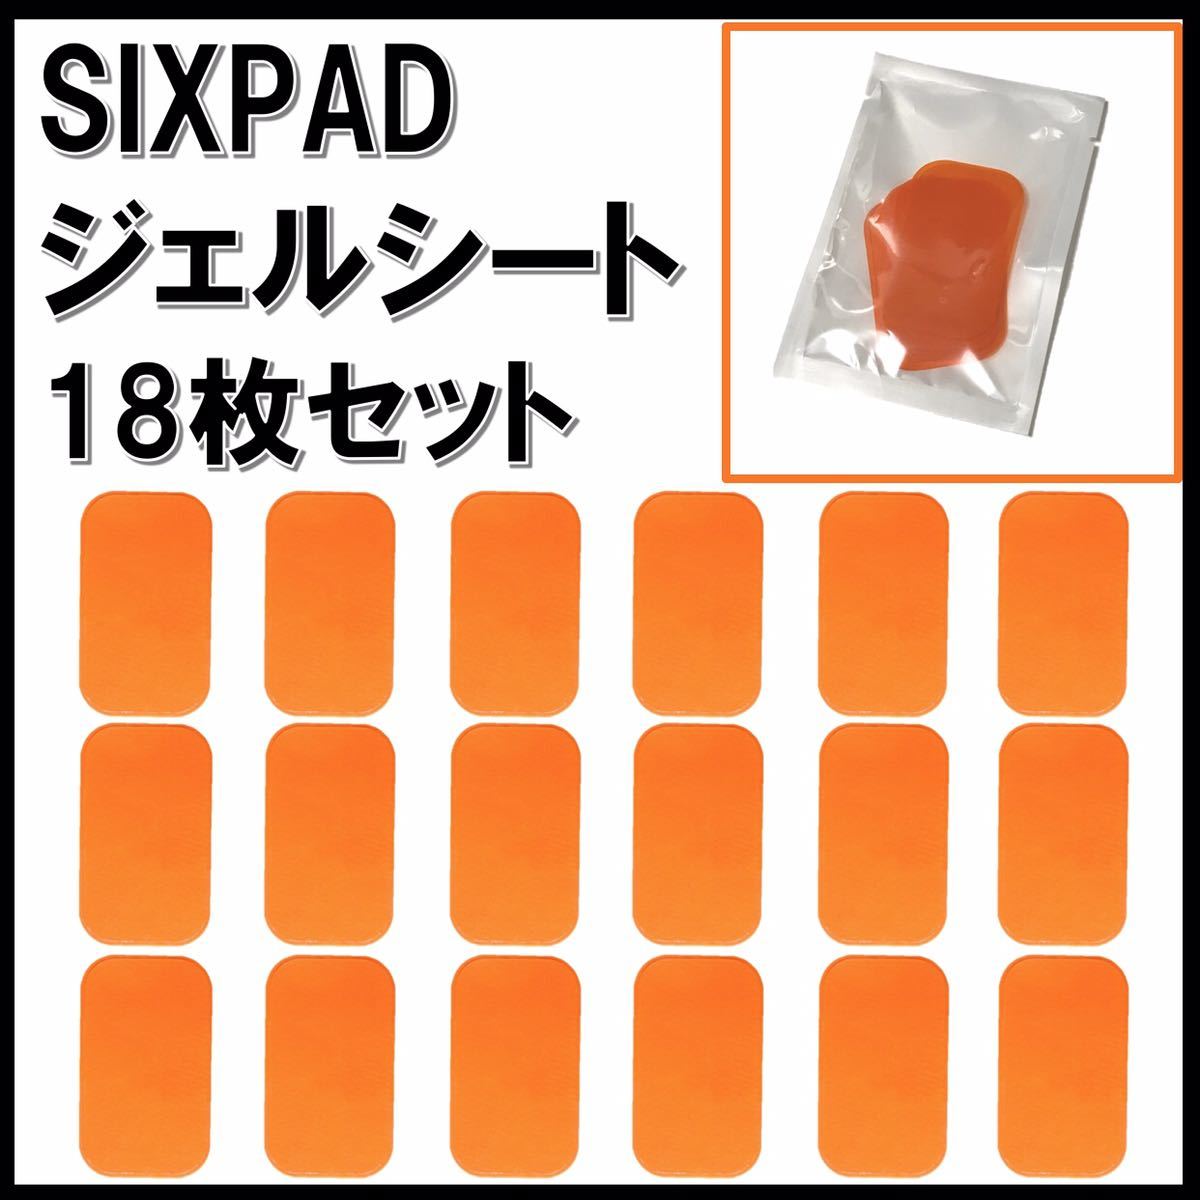 [18 pieces set ]SIXPAD Sixpad interchangeable goods gel seat Abu z Fit chest Fit . part for EMS substitute 6pad 6 pad six pad